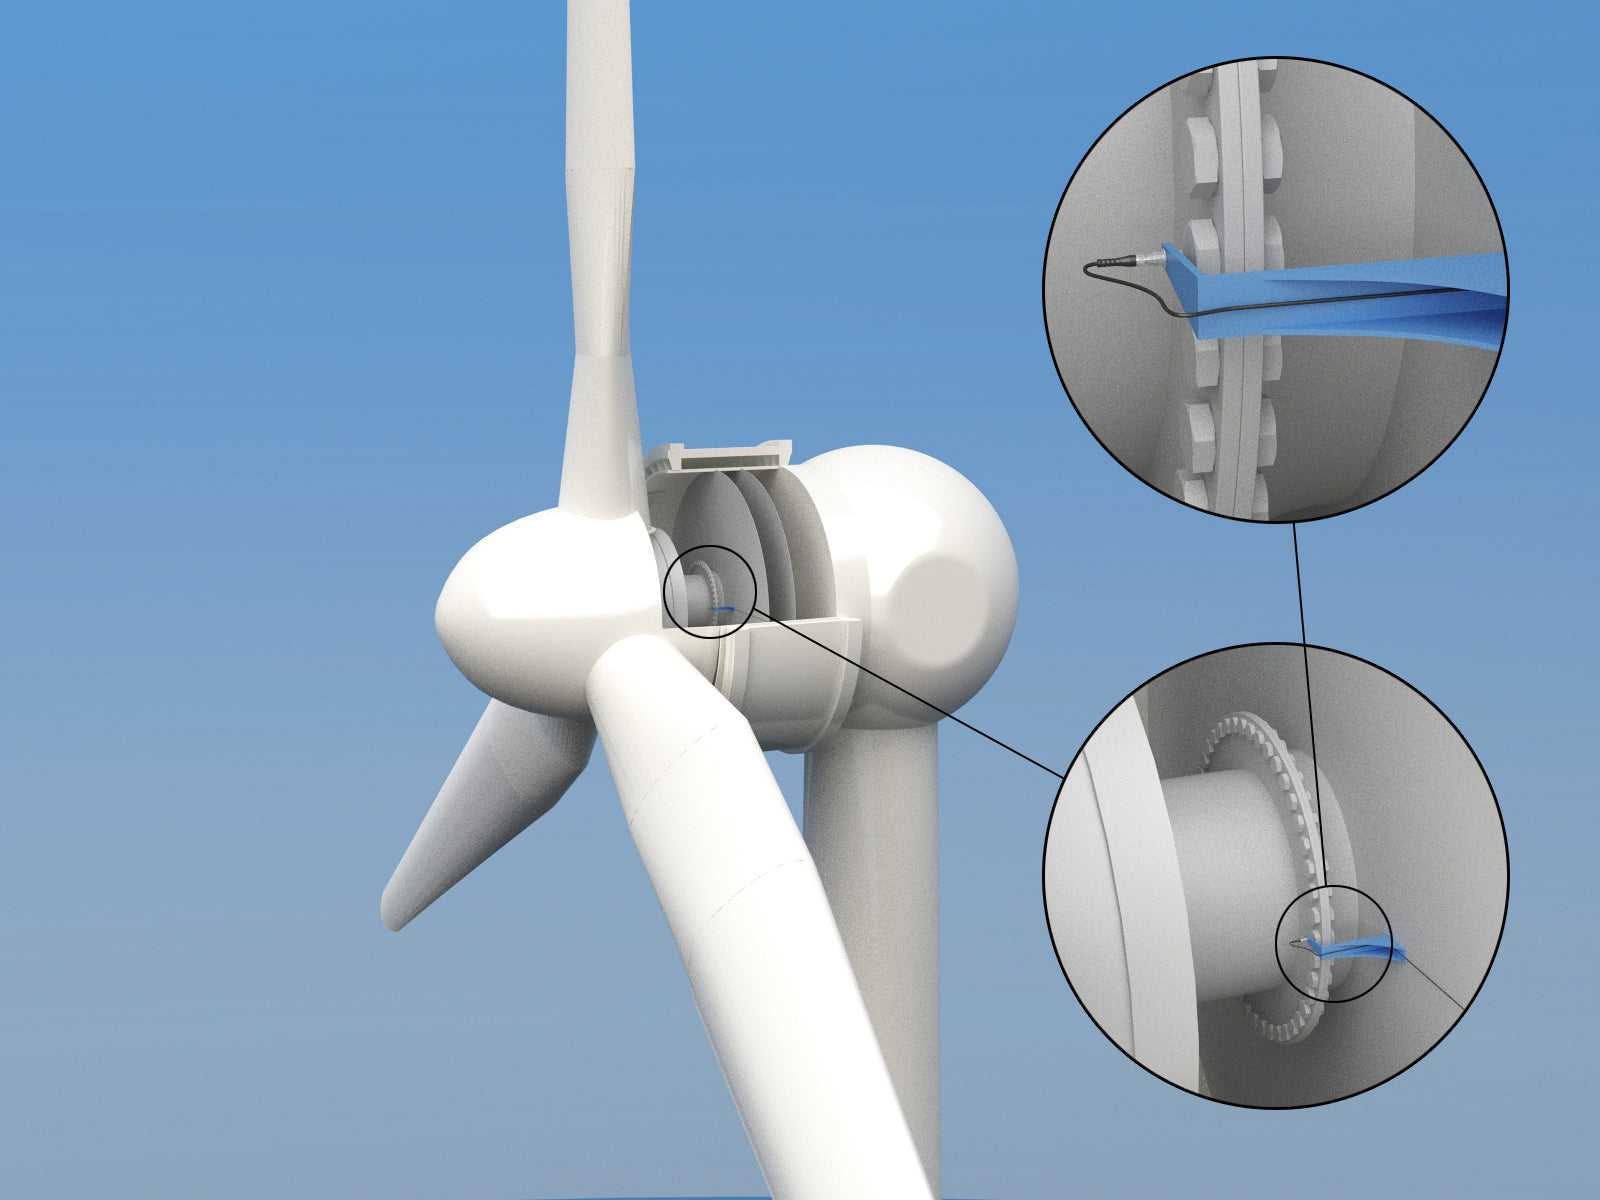 Rugged Inductive Sensor Measures Rotation Velocity of Wind Turbine Blades